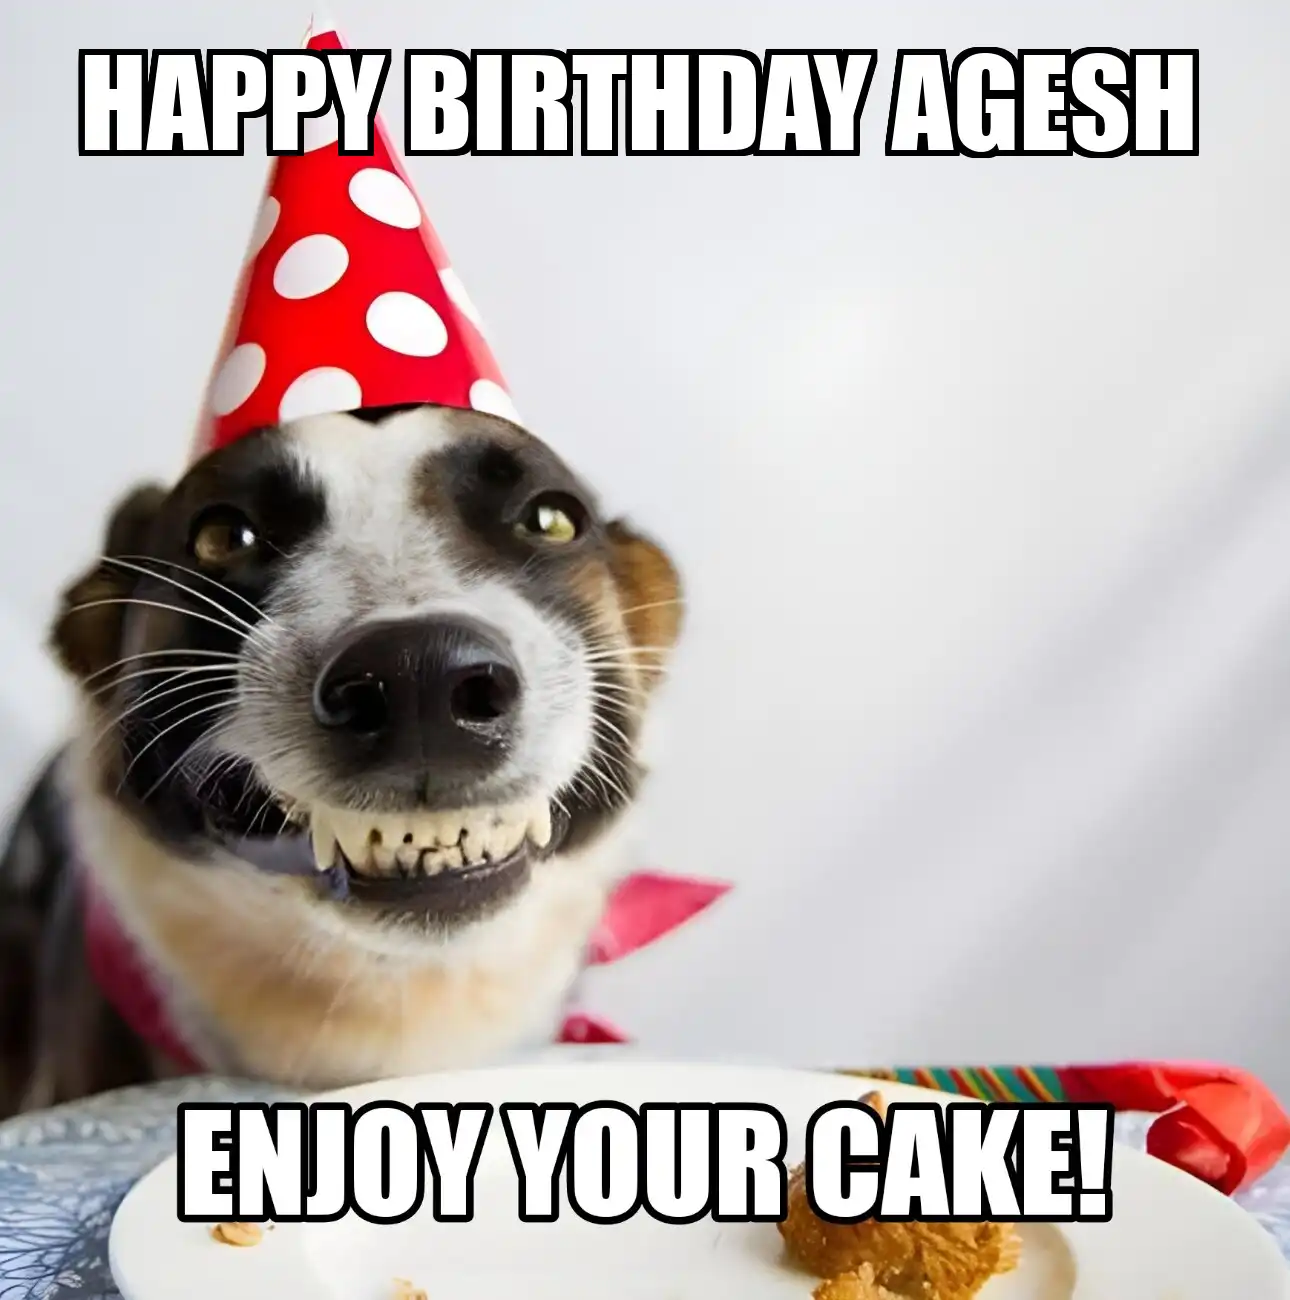 Happy Birthday Agesh Enjoy Your Cake Dog Meme